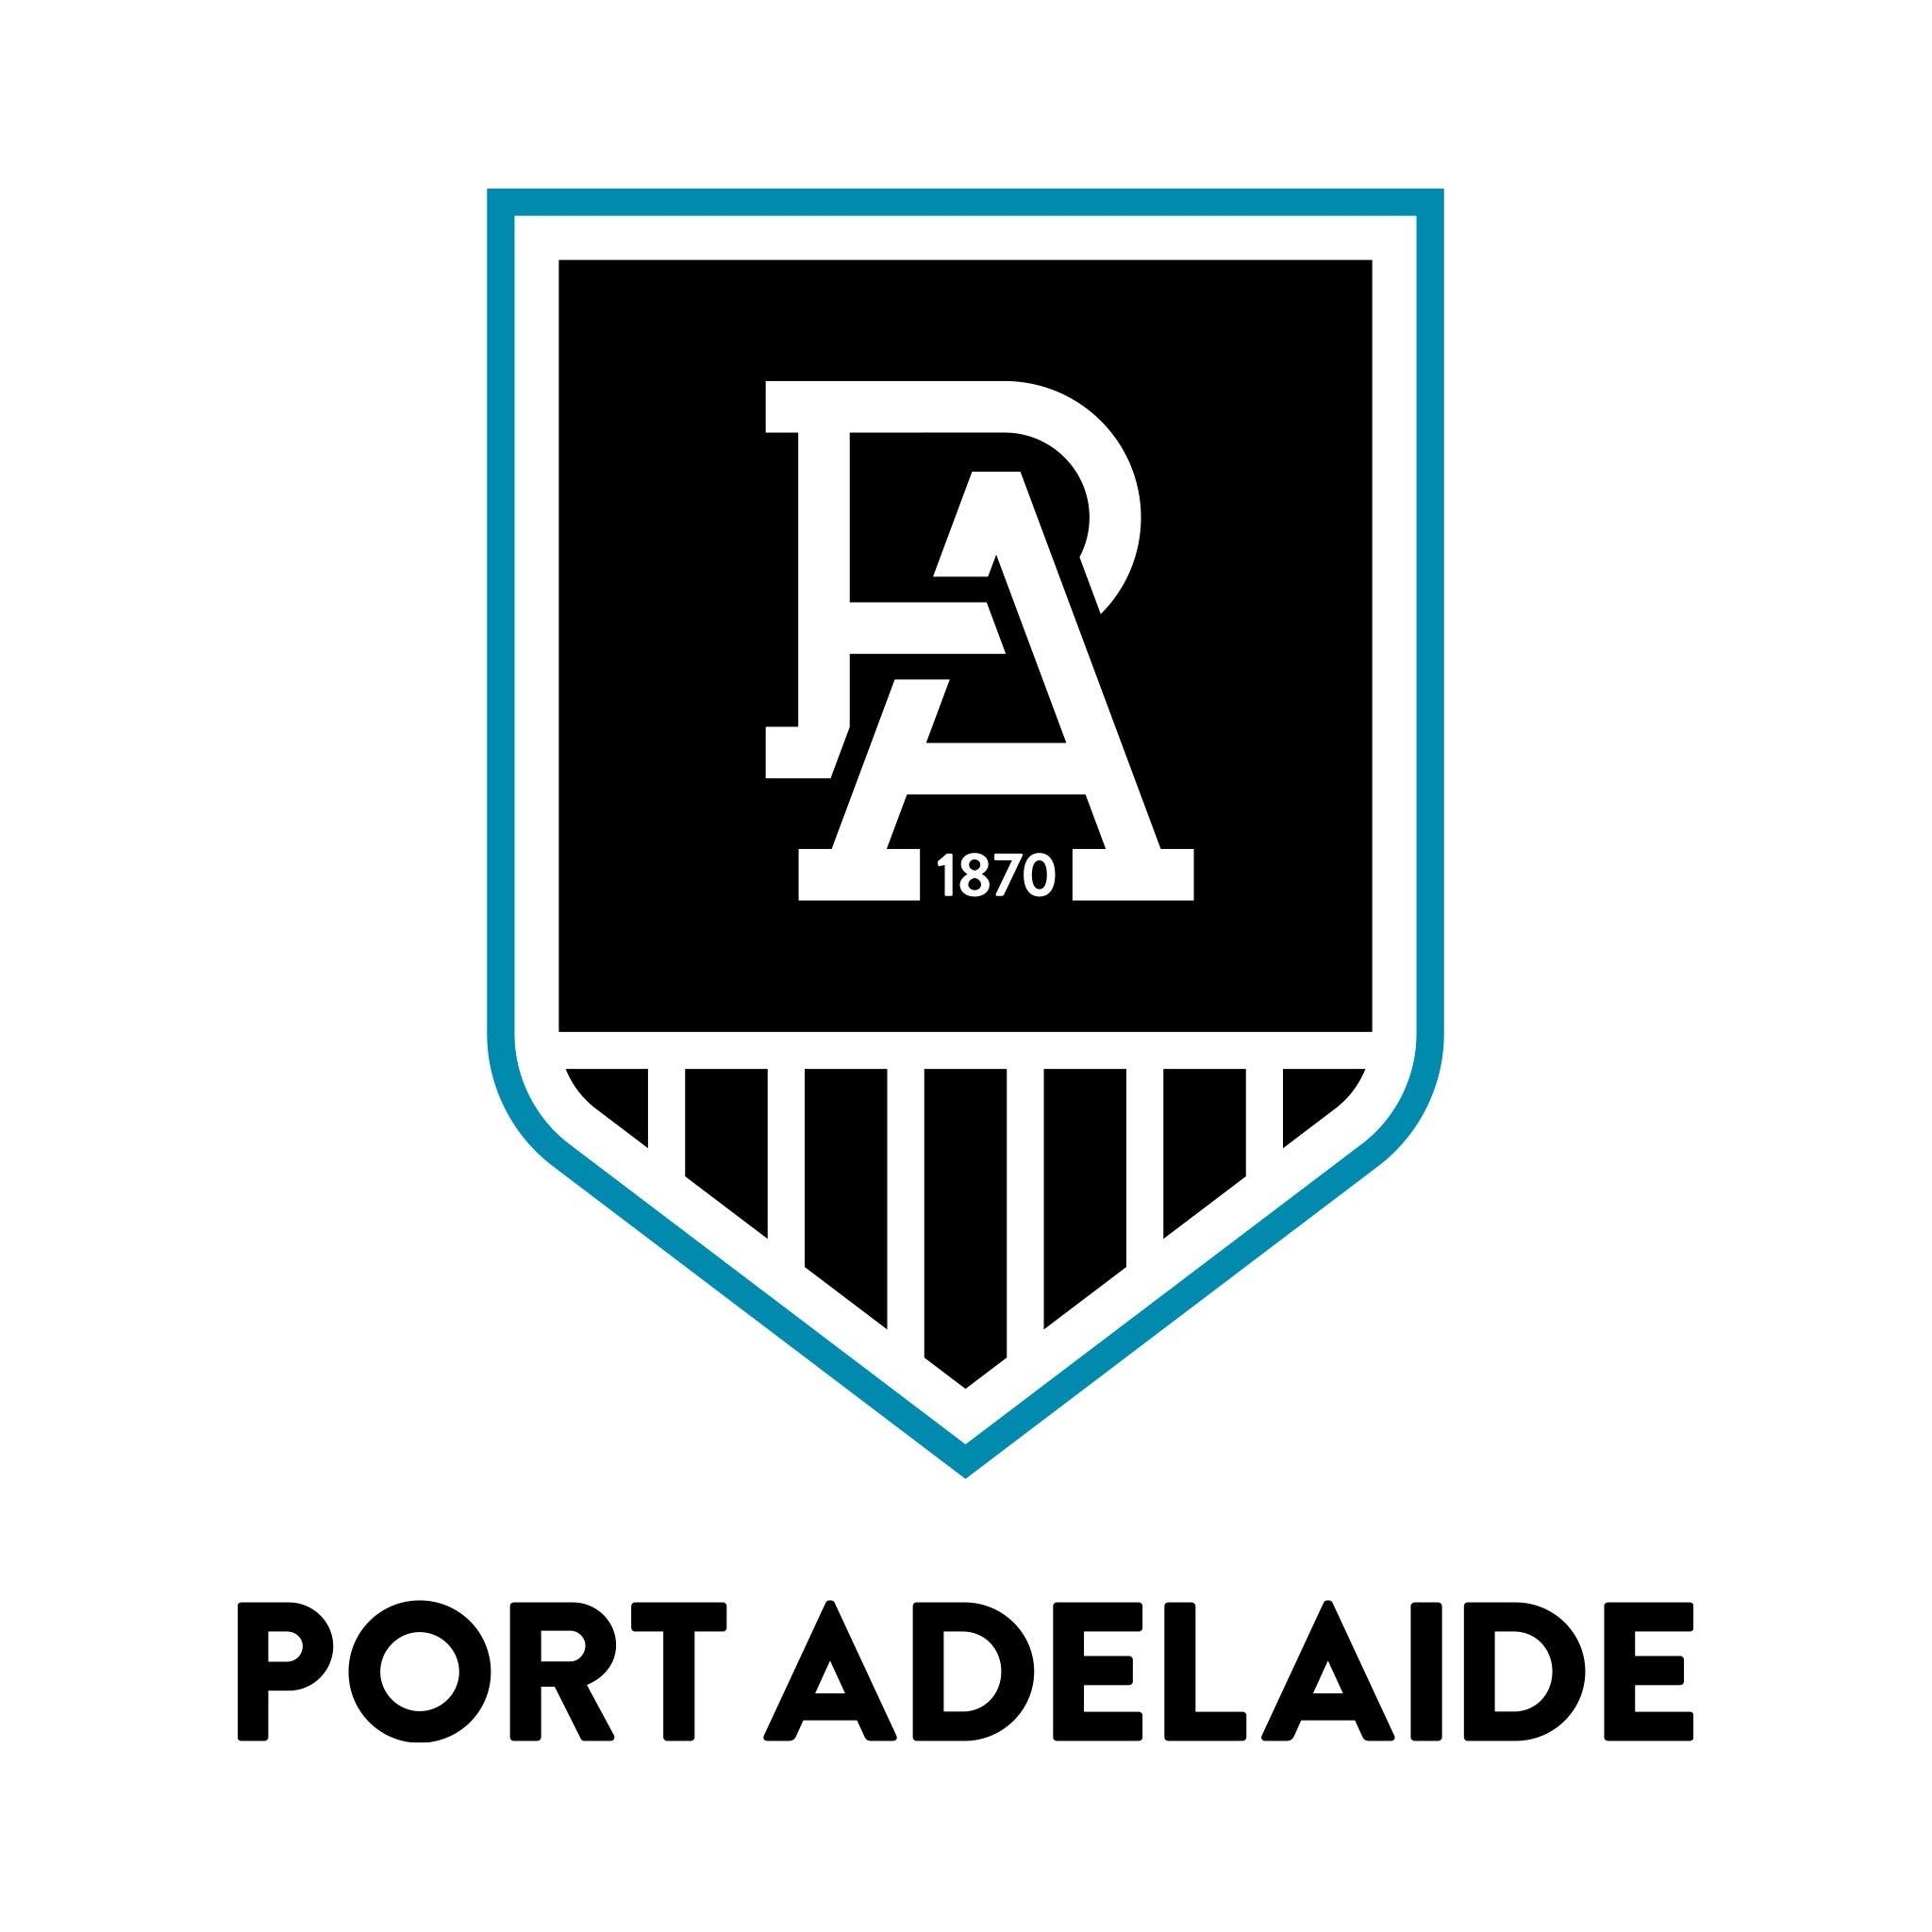 AFL Port Adelaide Merchandise by Ashtabula